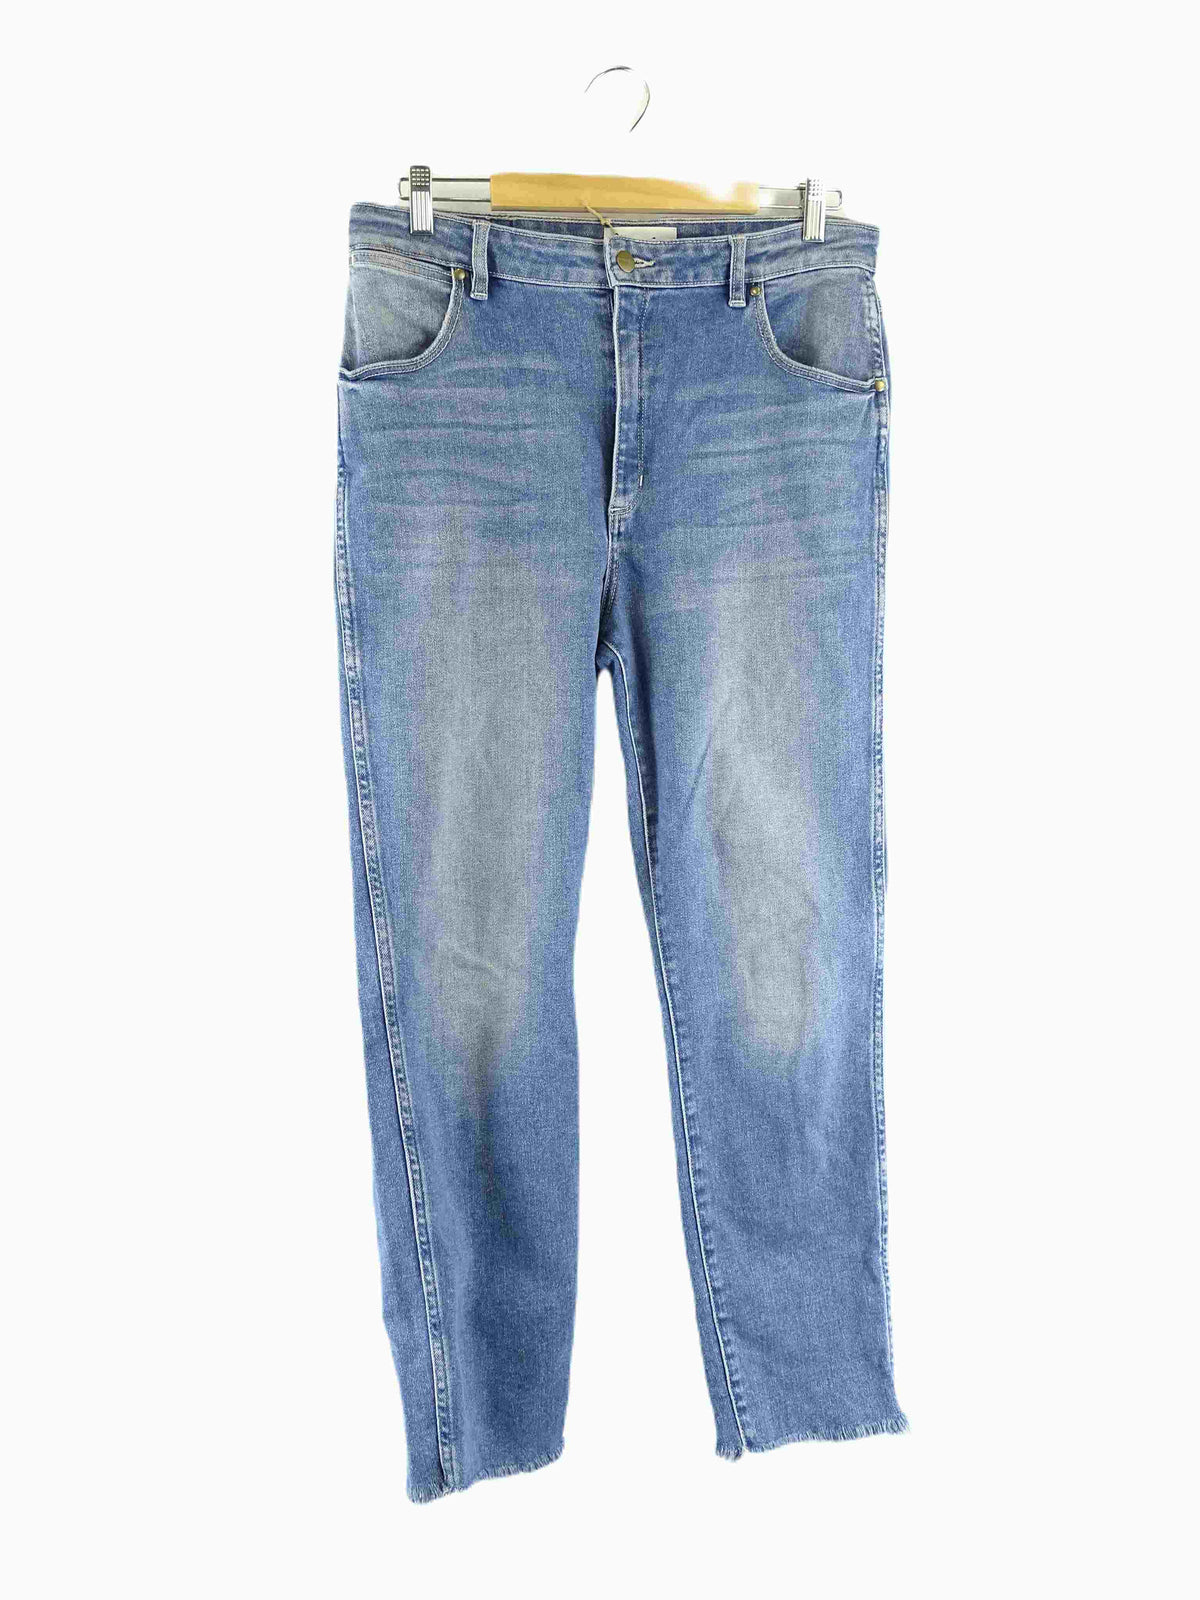 Wrangler Blue Denim Jeans AU 14 / 32